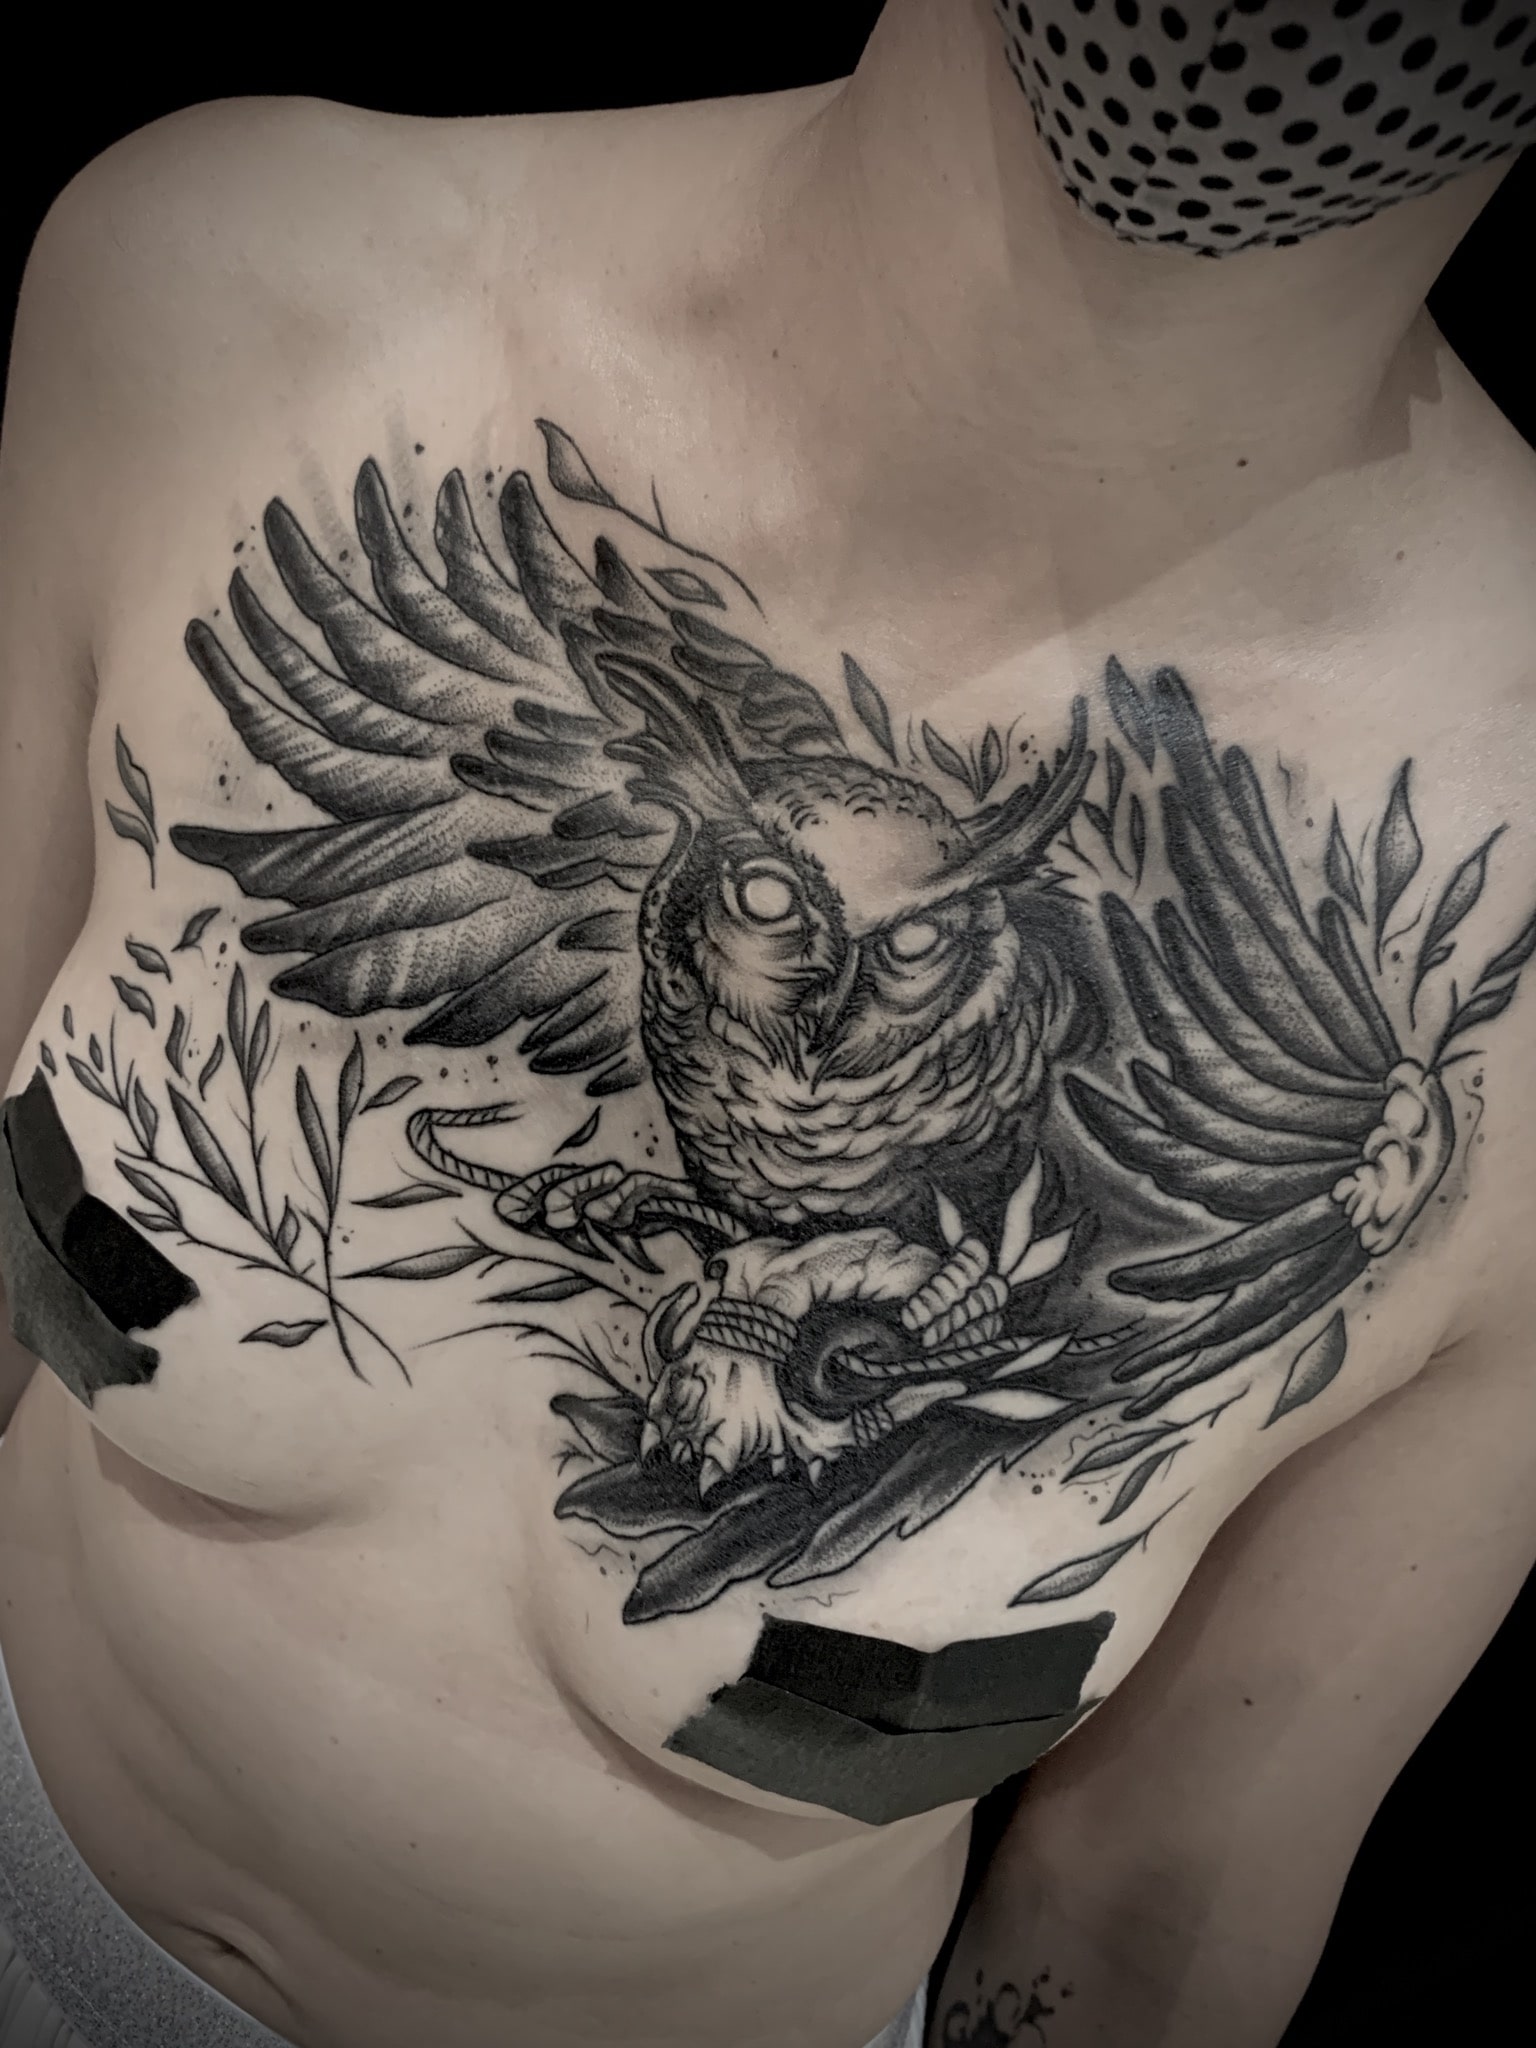 Tattoo Anansi München Artist David blackwork owl Eule Kautz flying chest